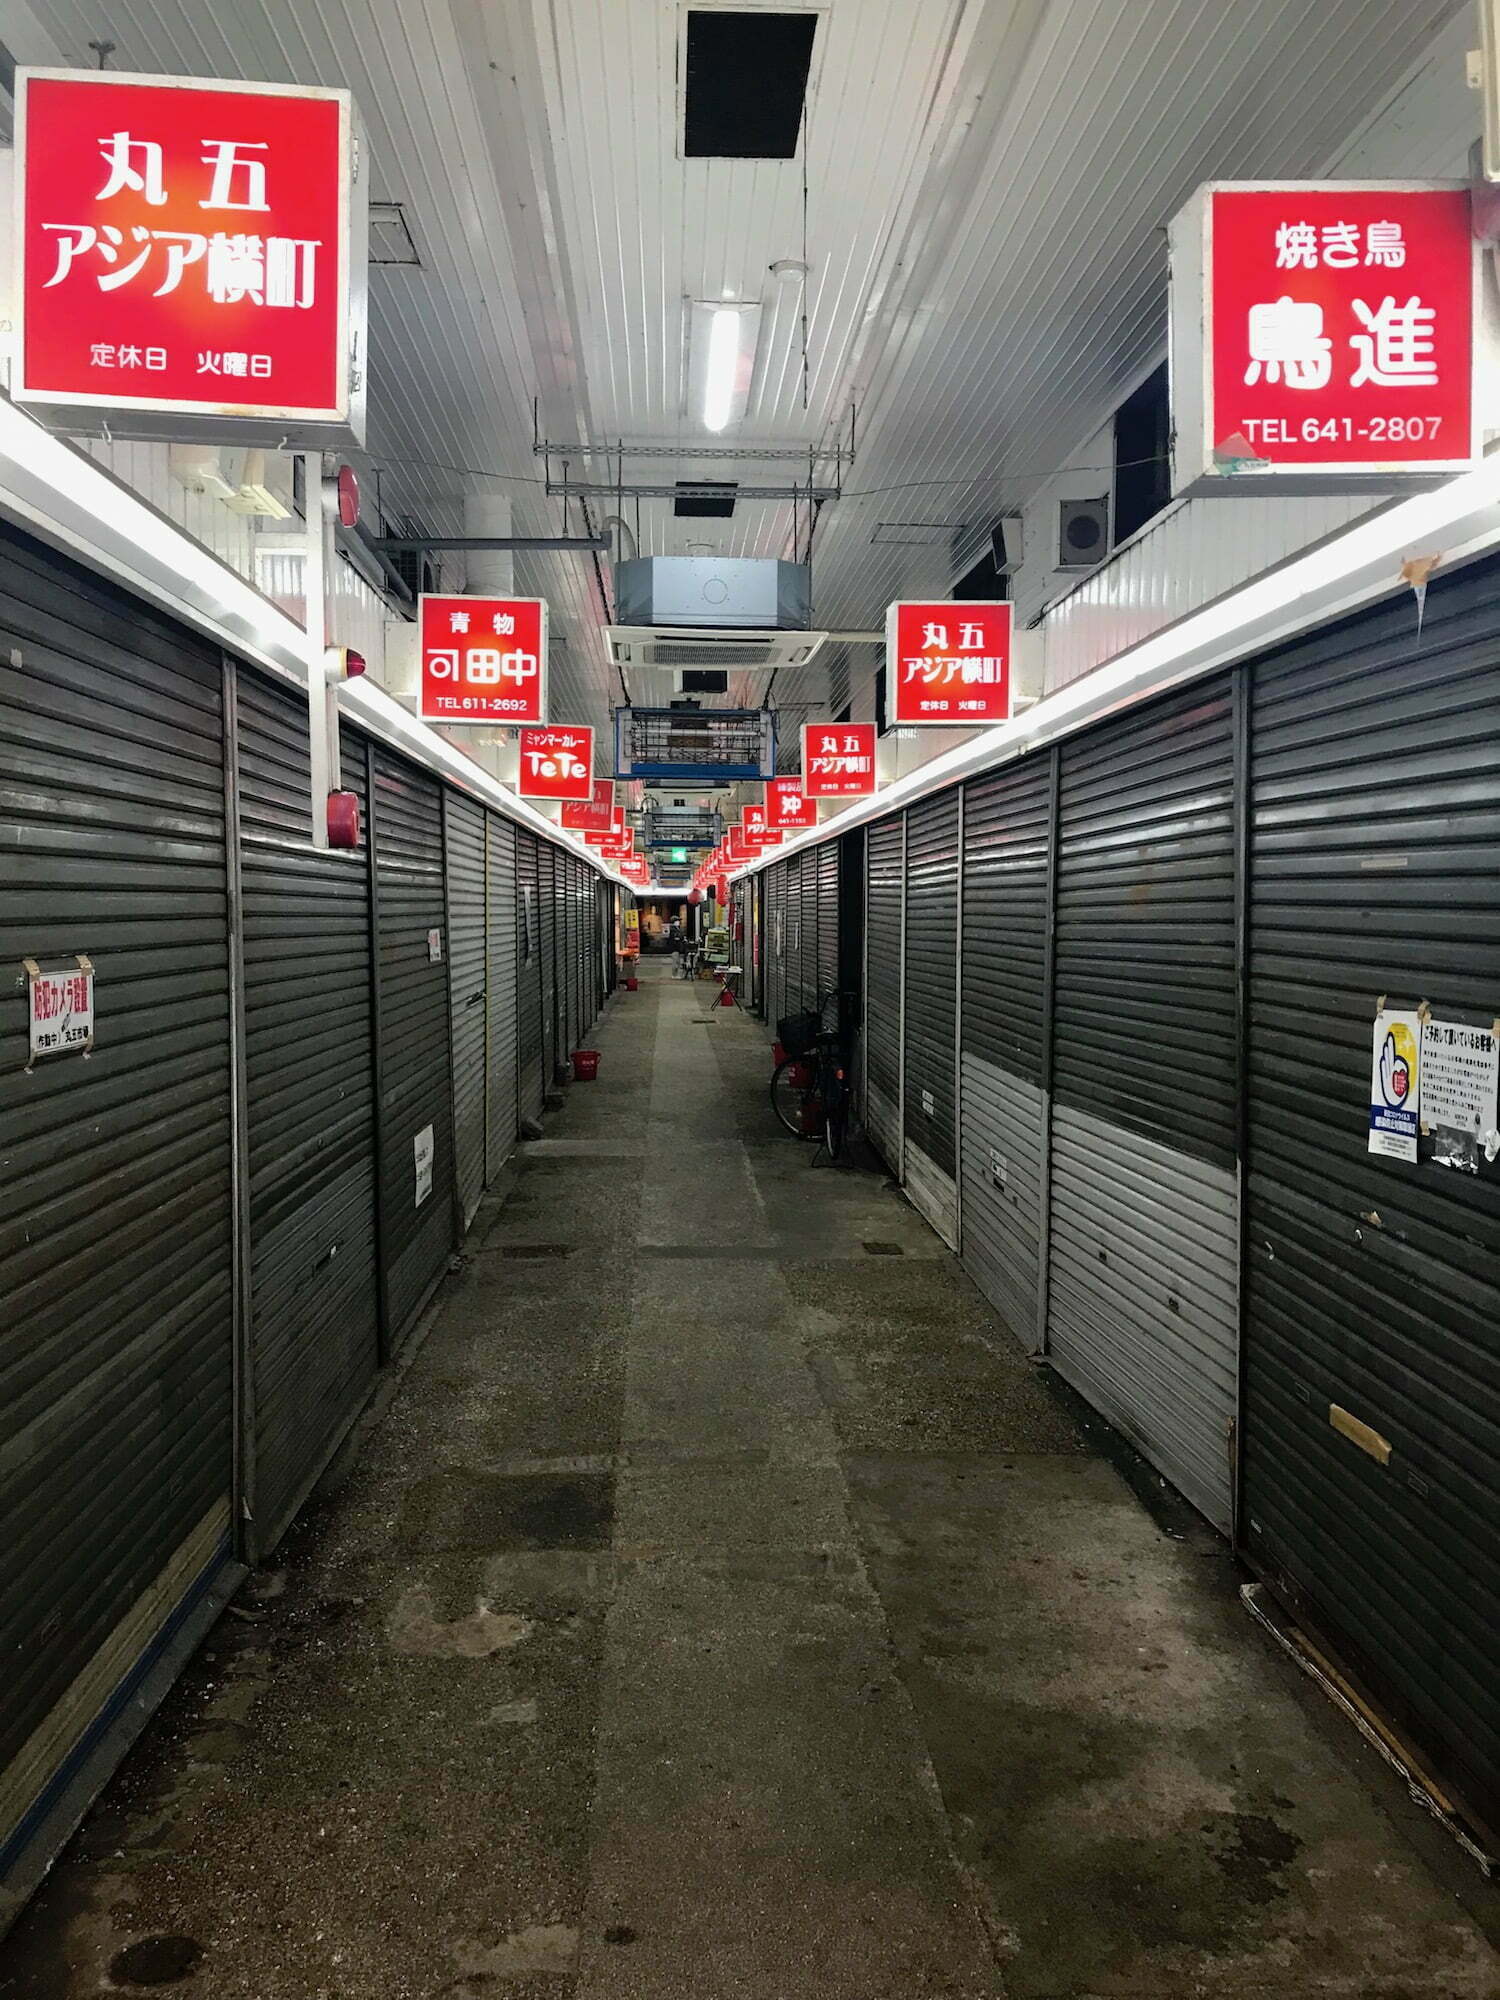 Marugo Market Old Shop mall survived Kobe earthquake